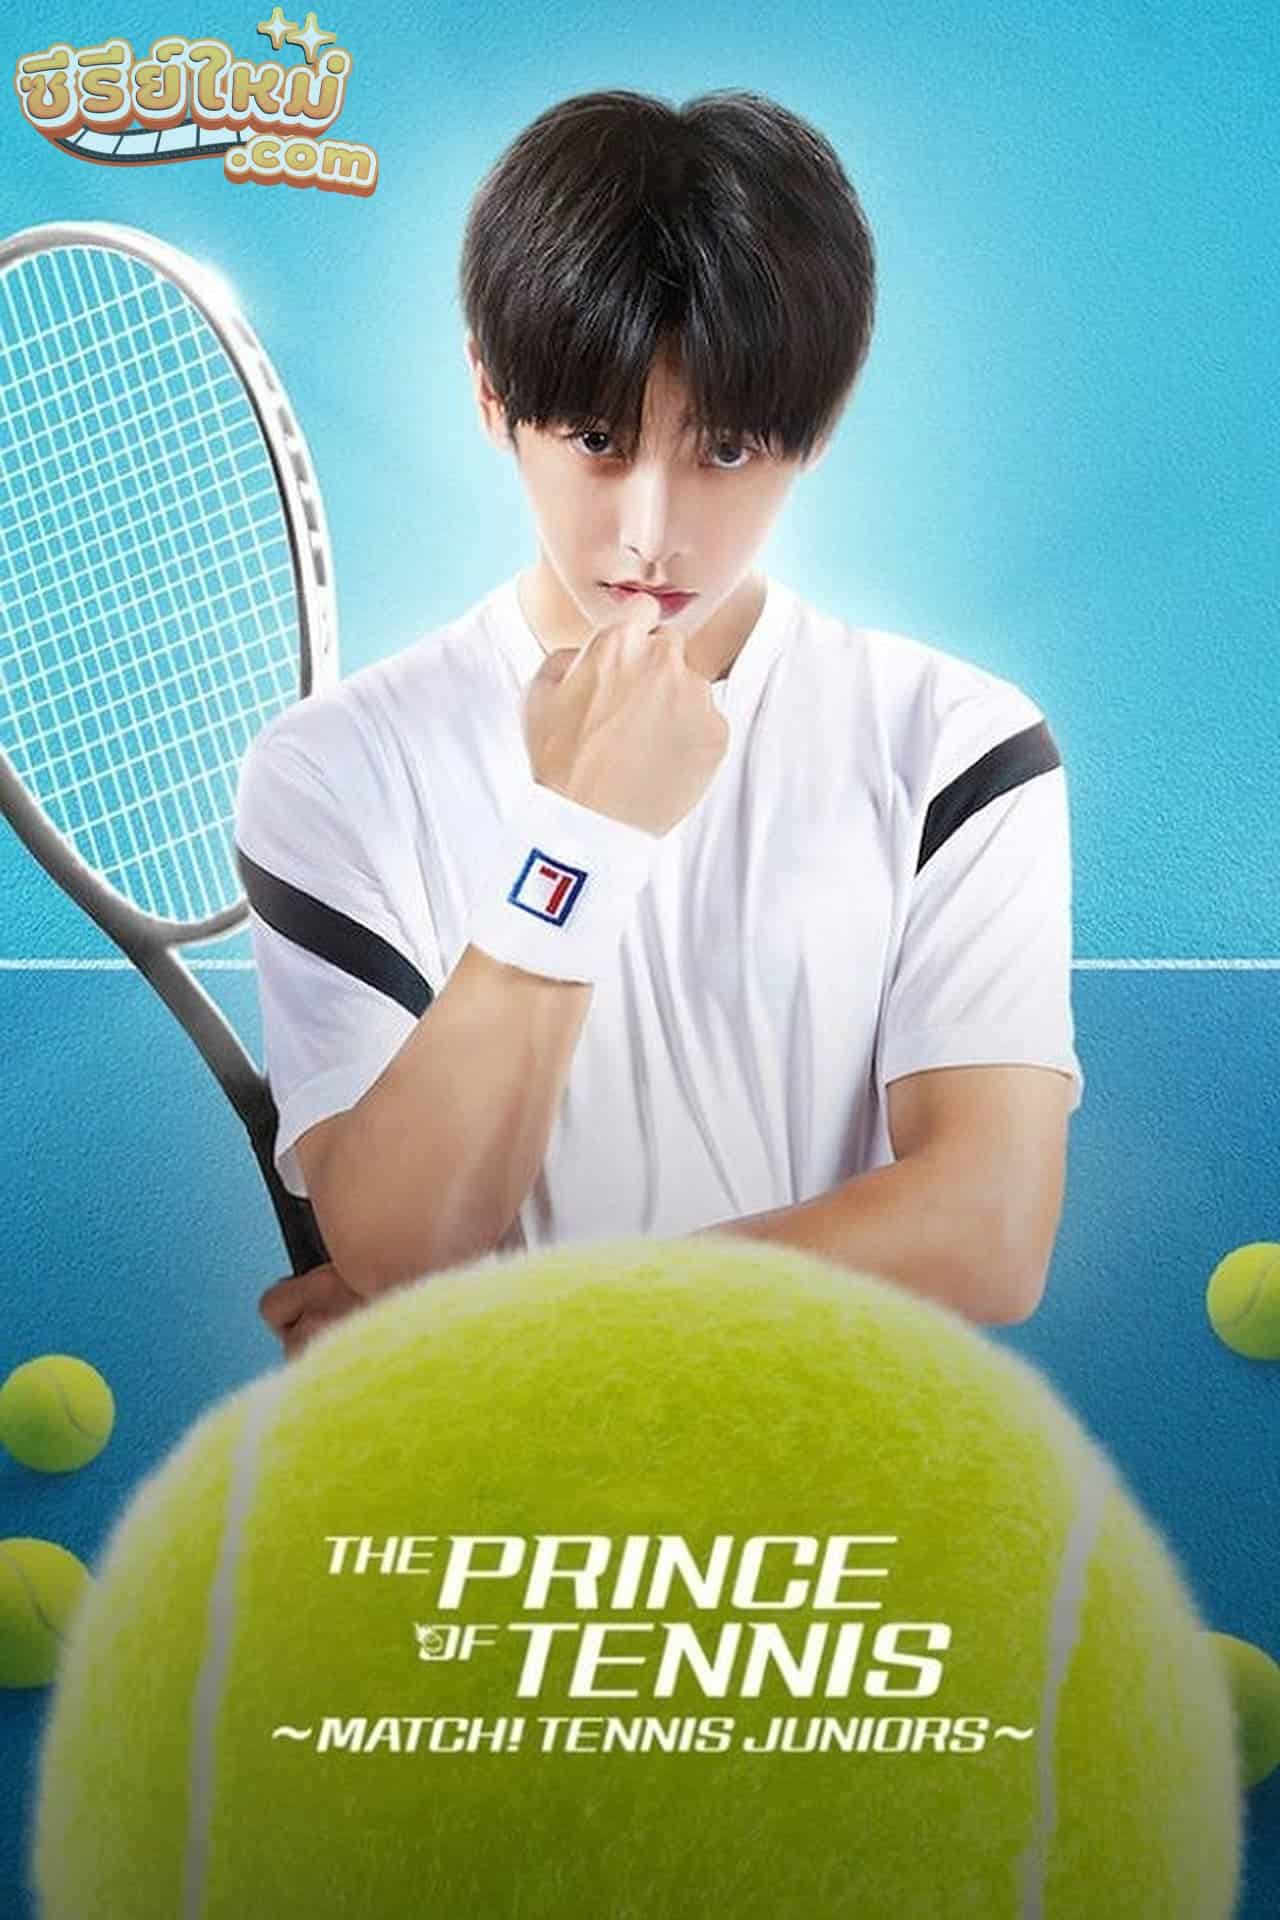 The Prince of Tennis เจ้าชายเทนนิส (2019)